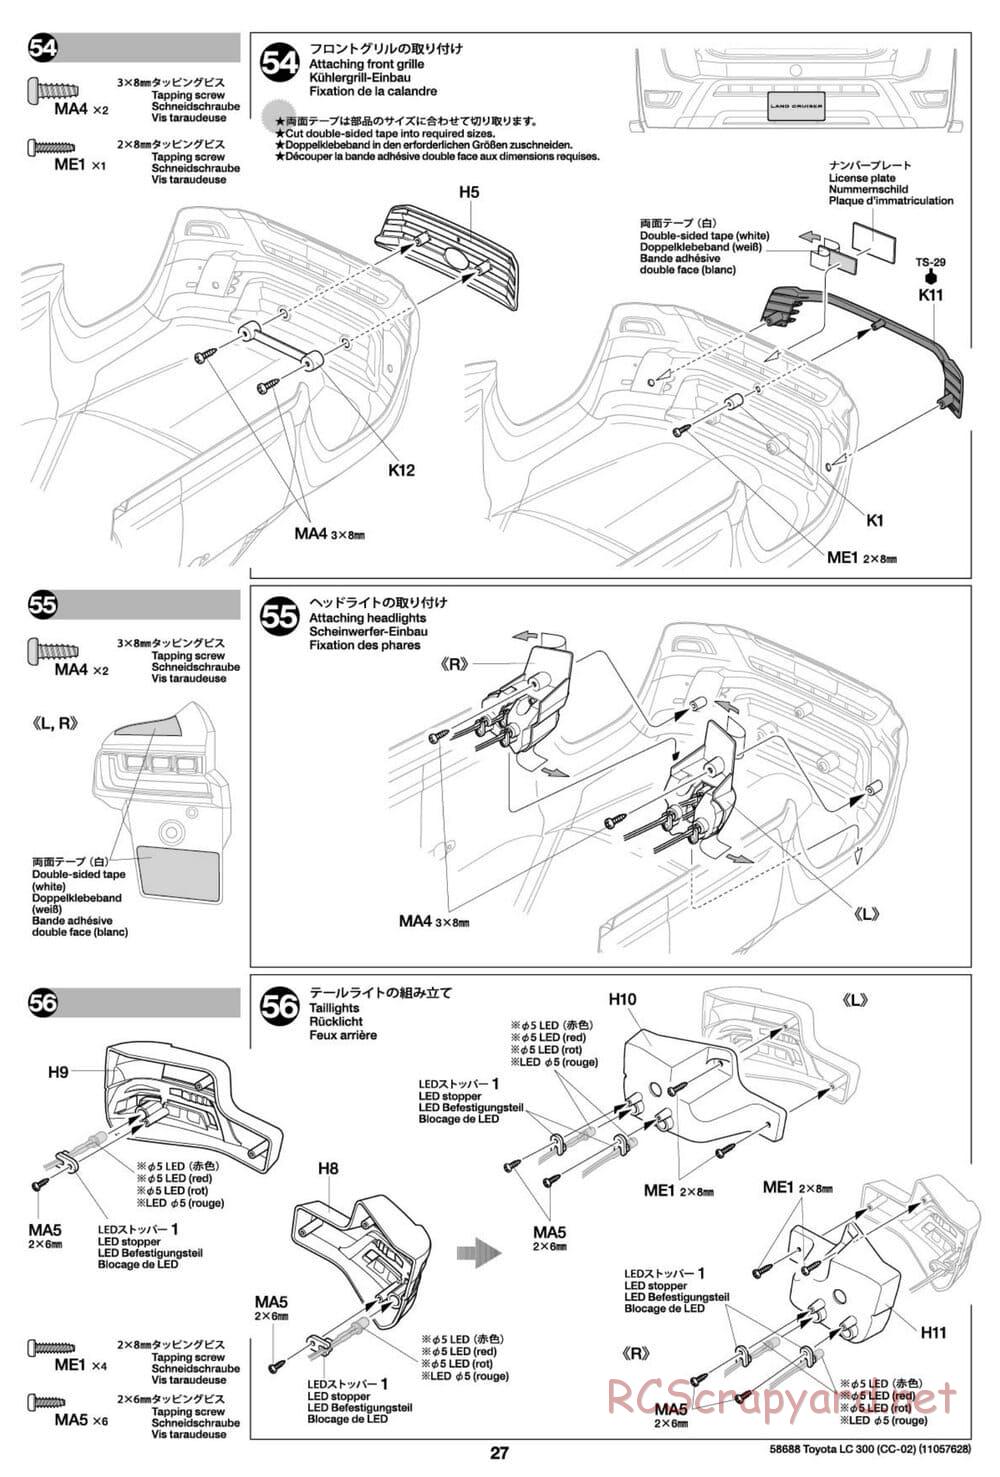 Tamiya - Toyota Land Cruiser 300 - CC-02 Chassis - Manual - Page 27